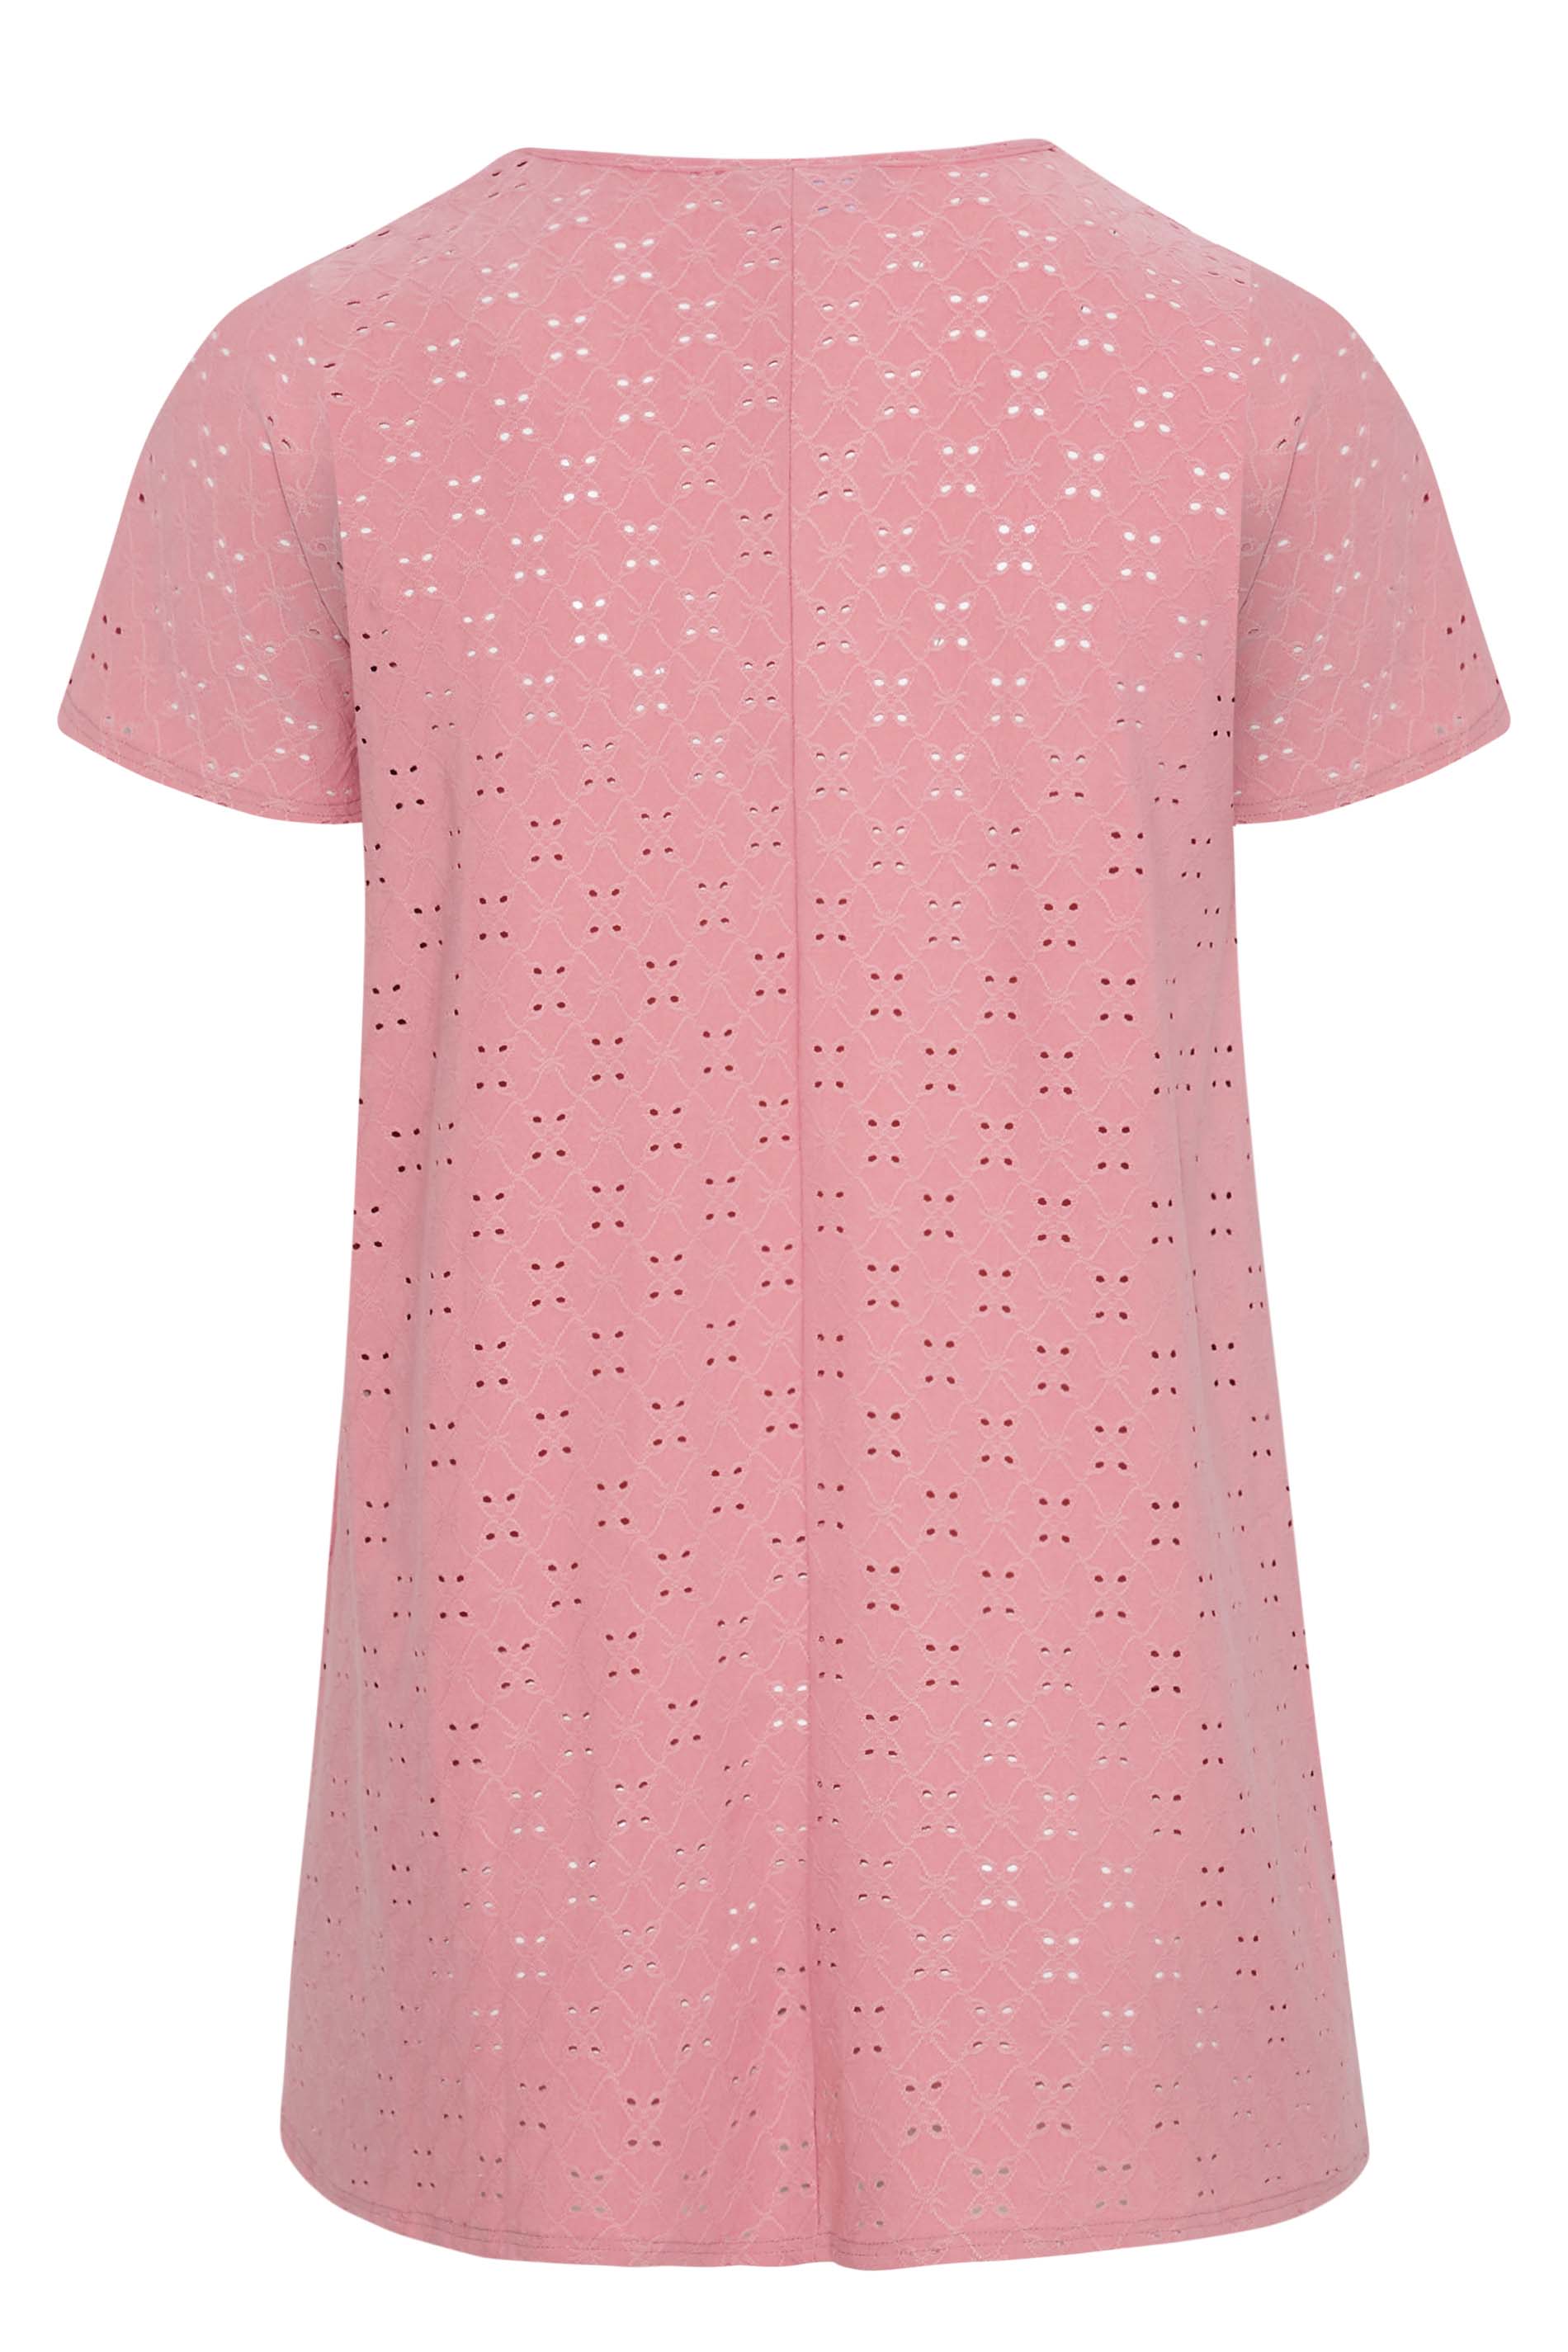 Grande taille  Tops Grande taille  T-Shirts | T-Shirt Rose Broderie Anglaise en Volanté - OG80021